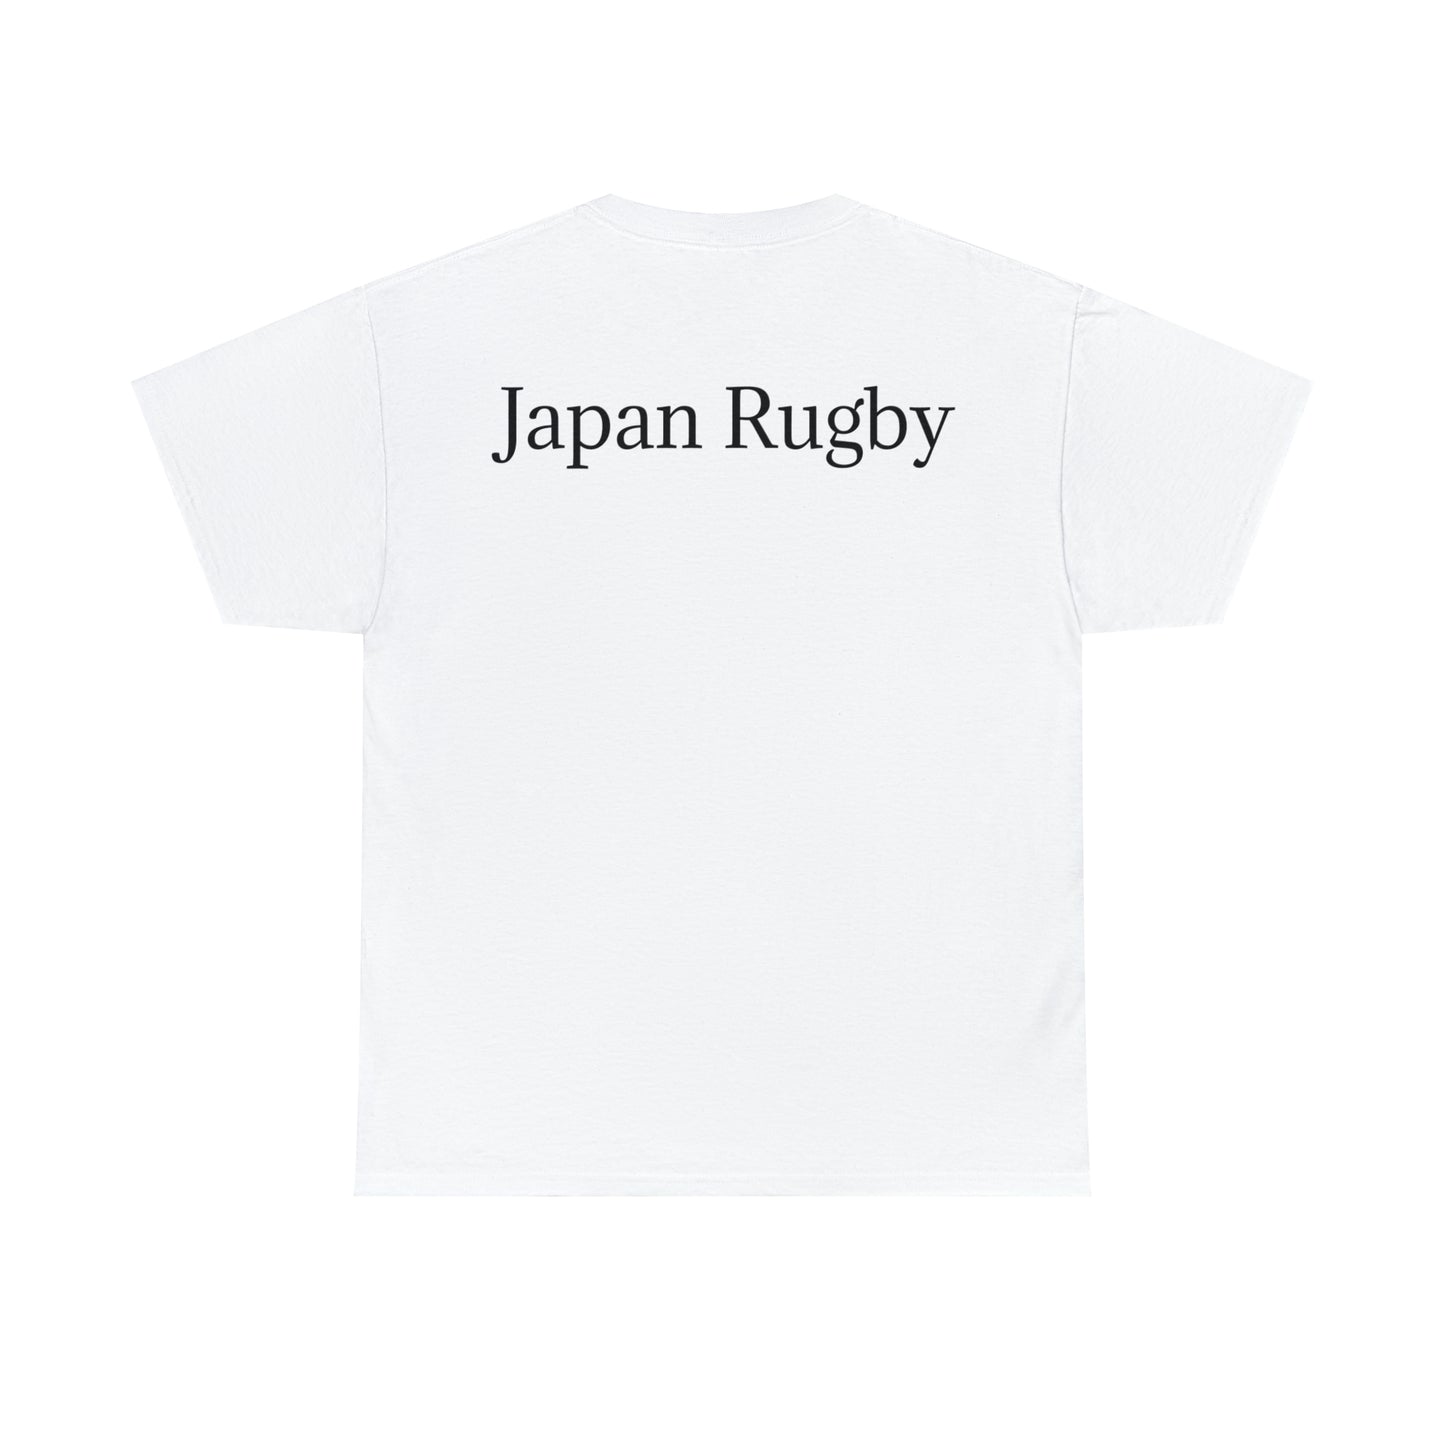 Rugby Samurai - light shirts